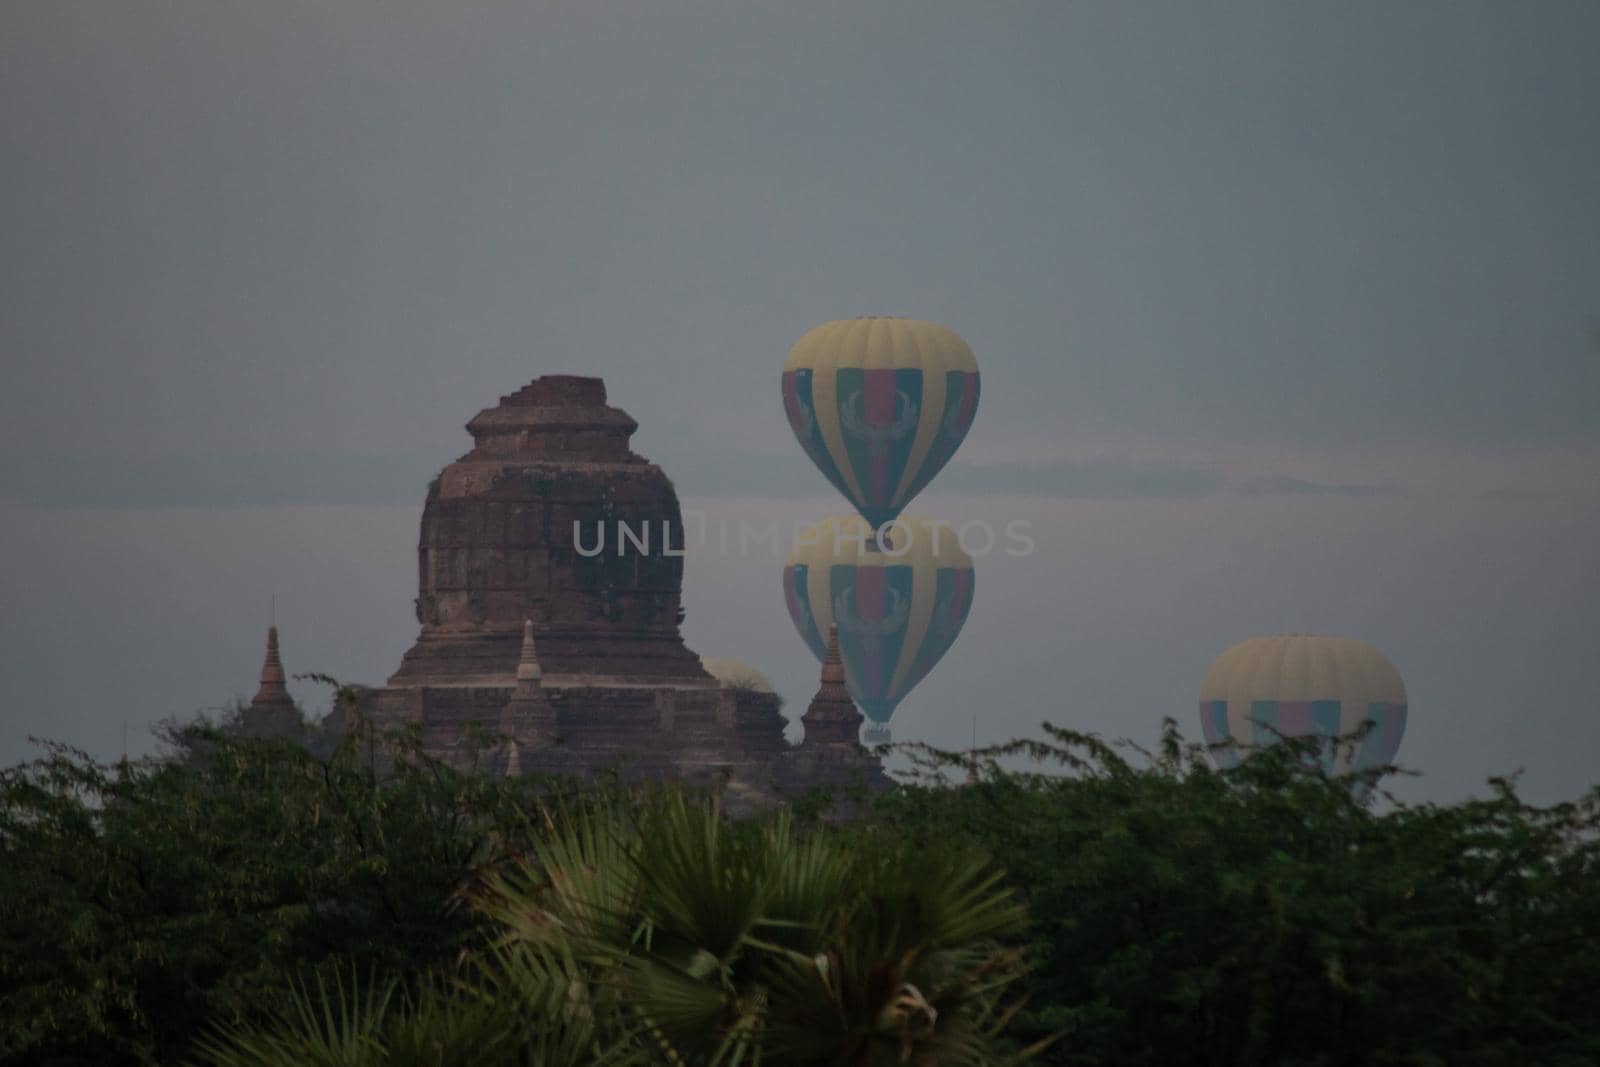 BAGAN, NYAUNG-U, MYANMAR - 2 JANUARY 2020: A few hot air balloons rises behind a historic pagoda temple